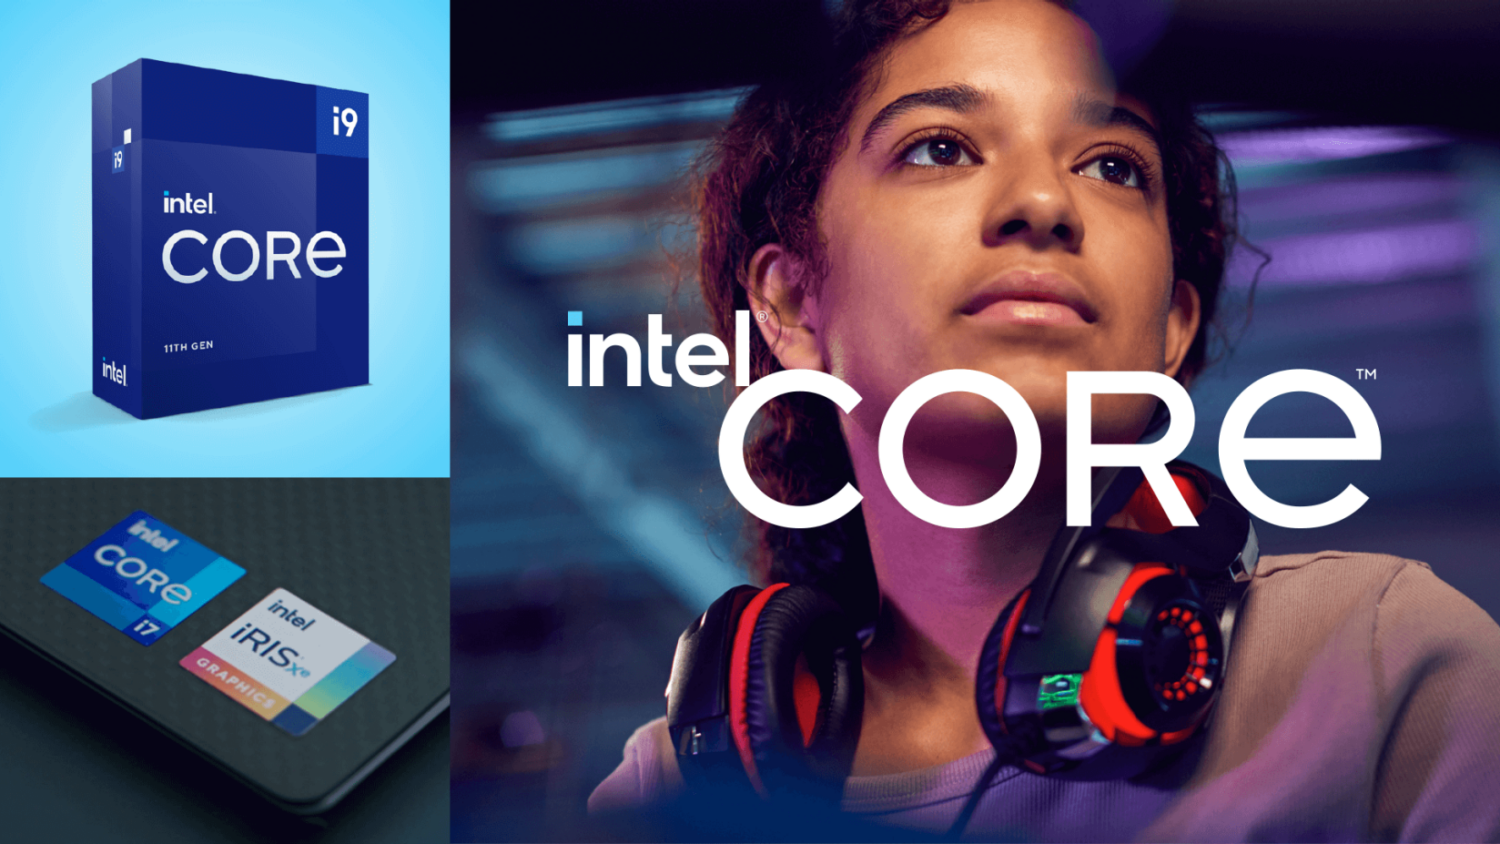 Intel Core Verpackung, Quelle: Intel